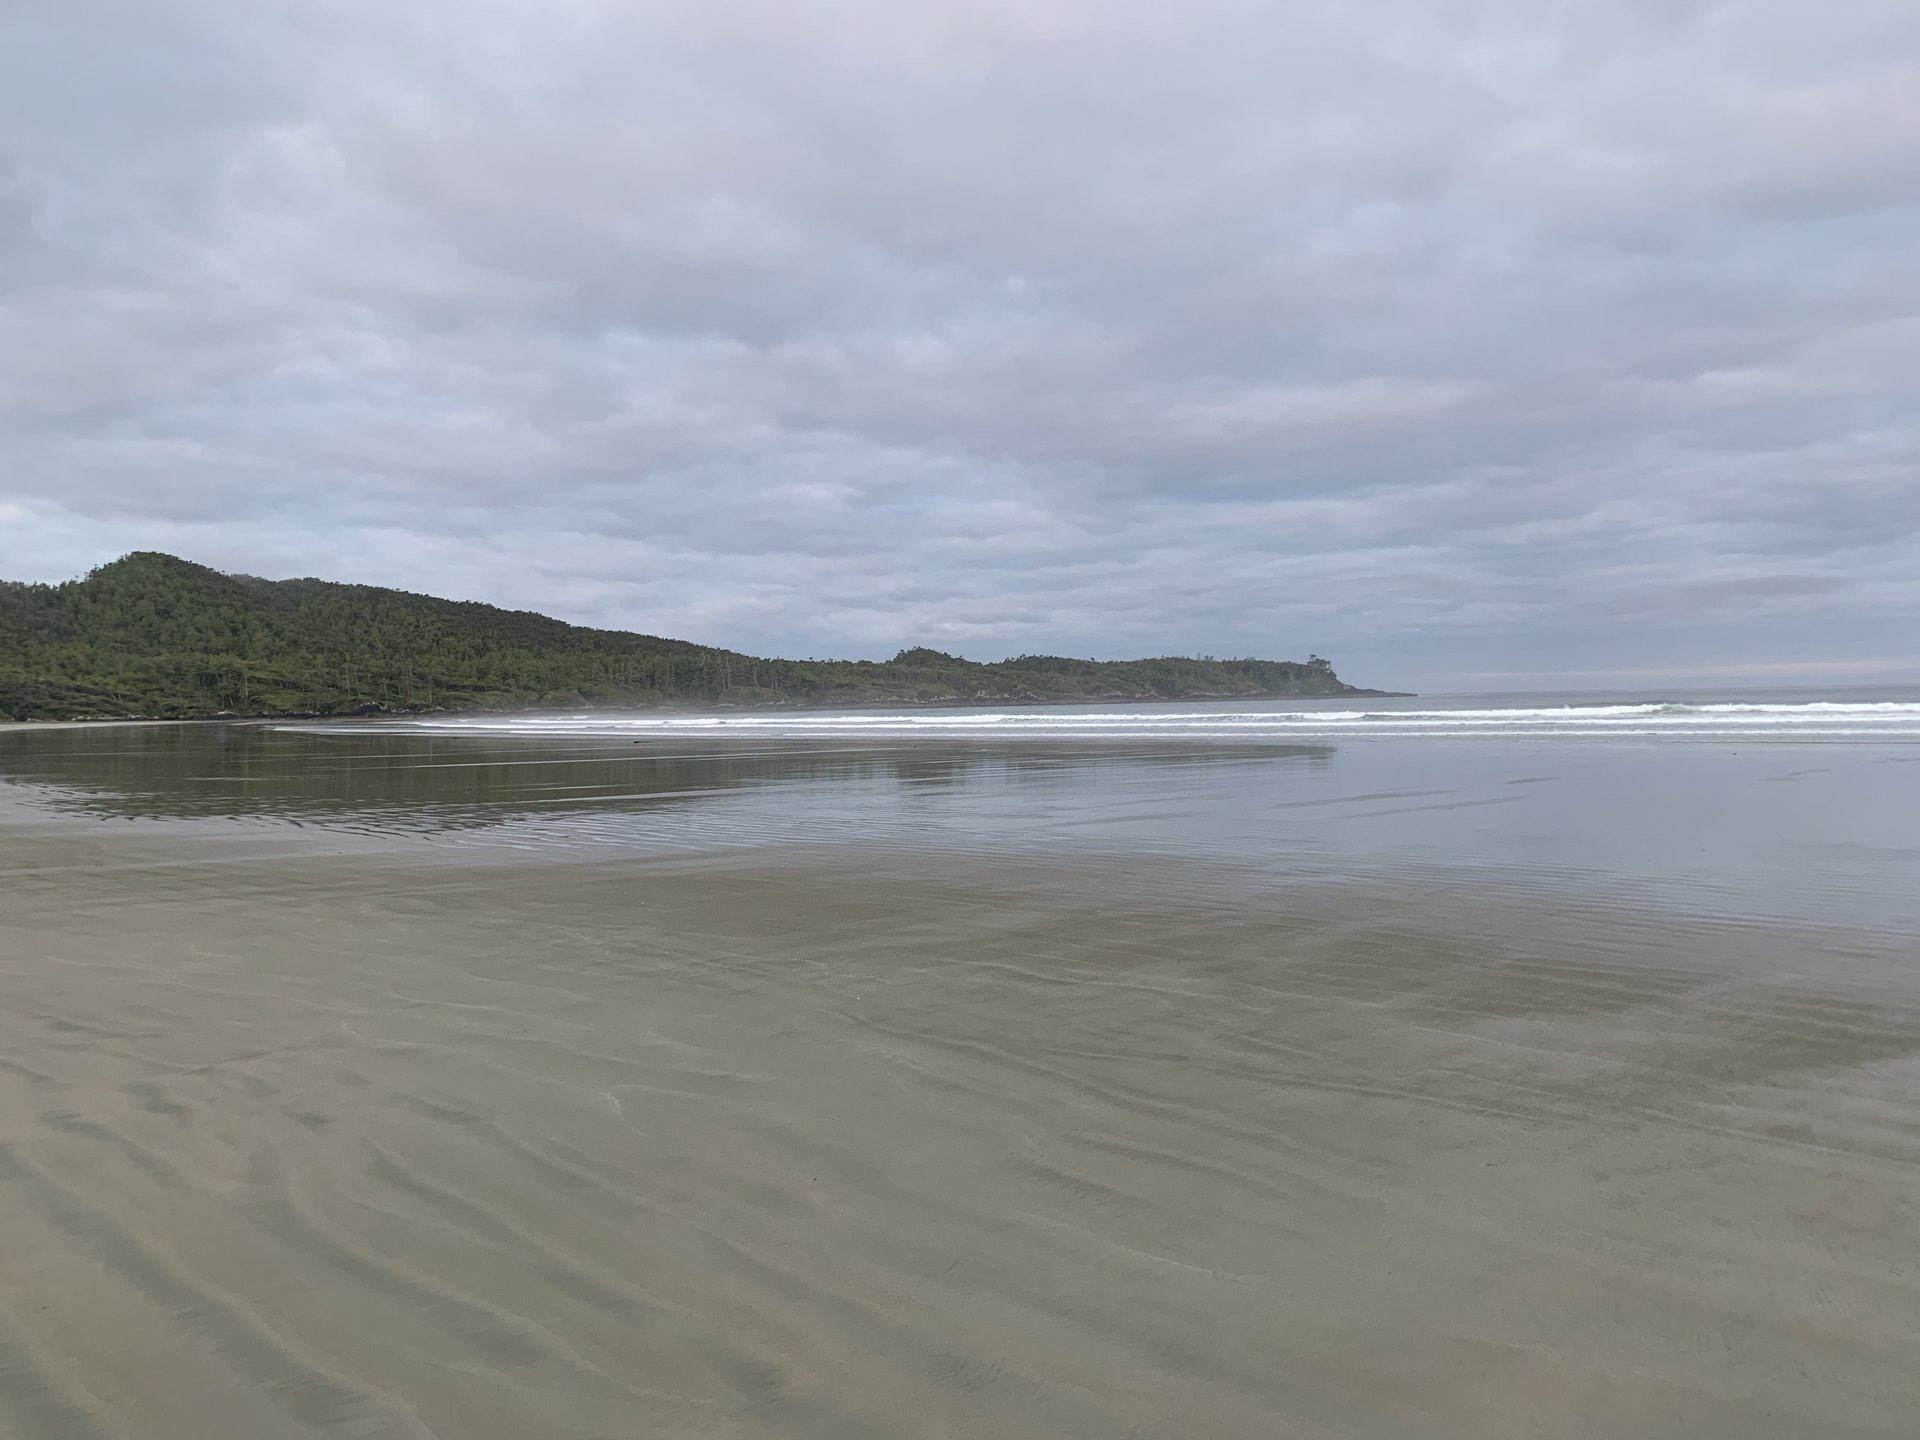 James 2 NASB.  Wet, wavy sand along the ocean coastline with grey skies above.